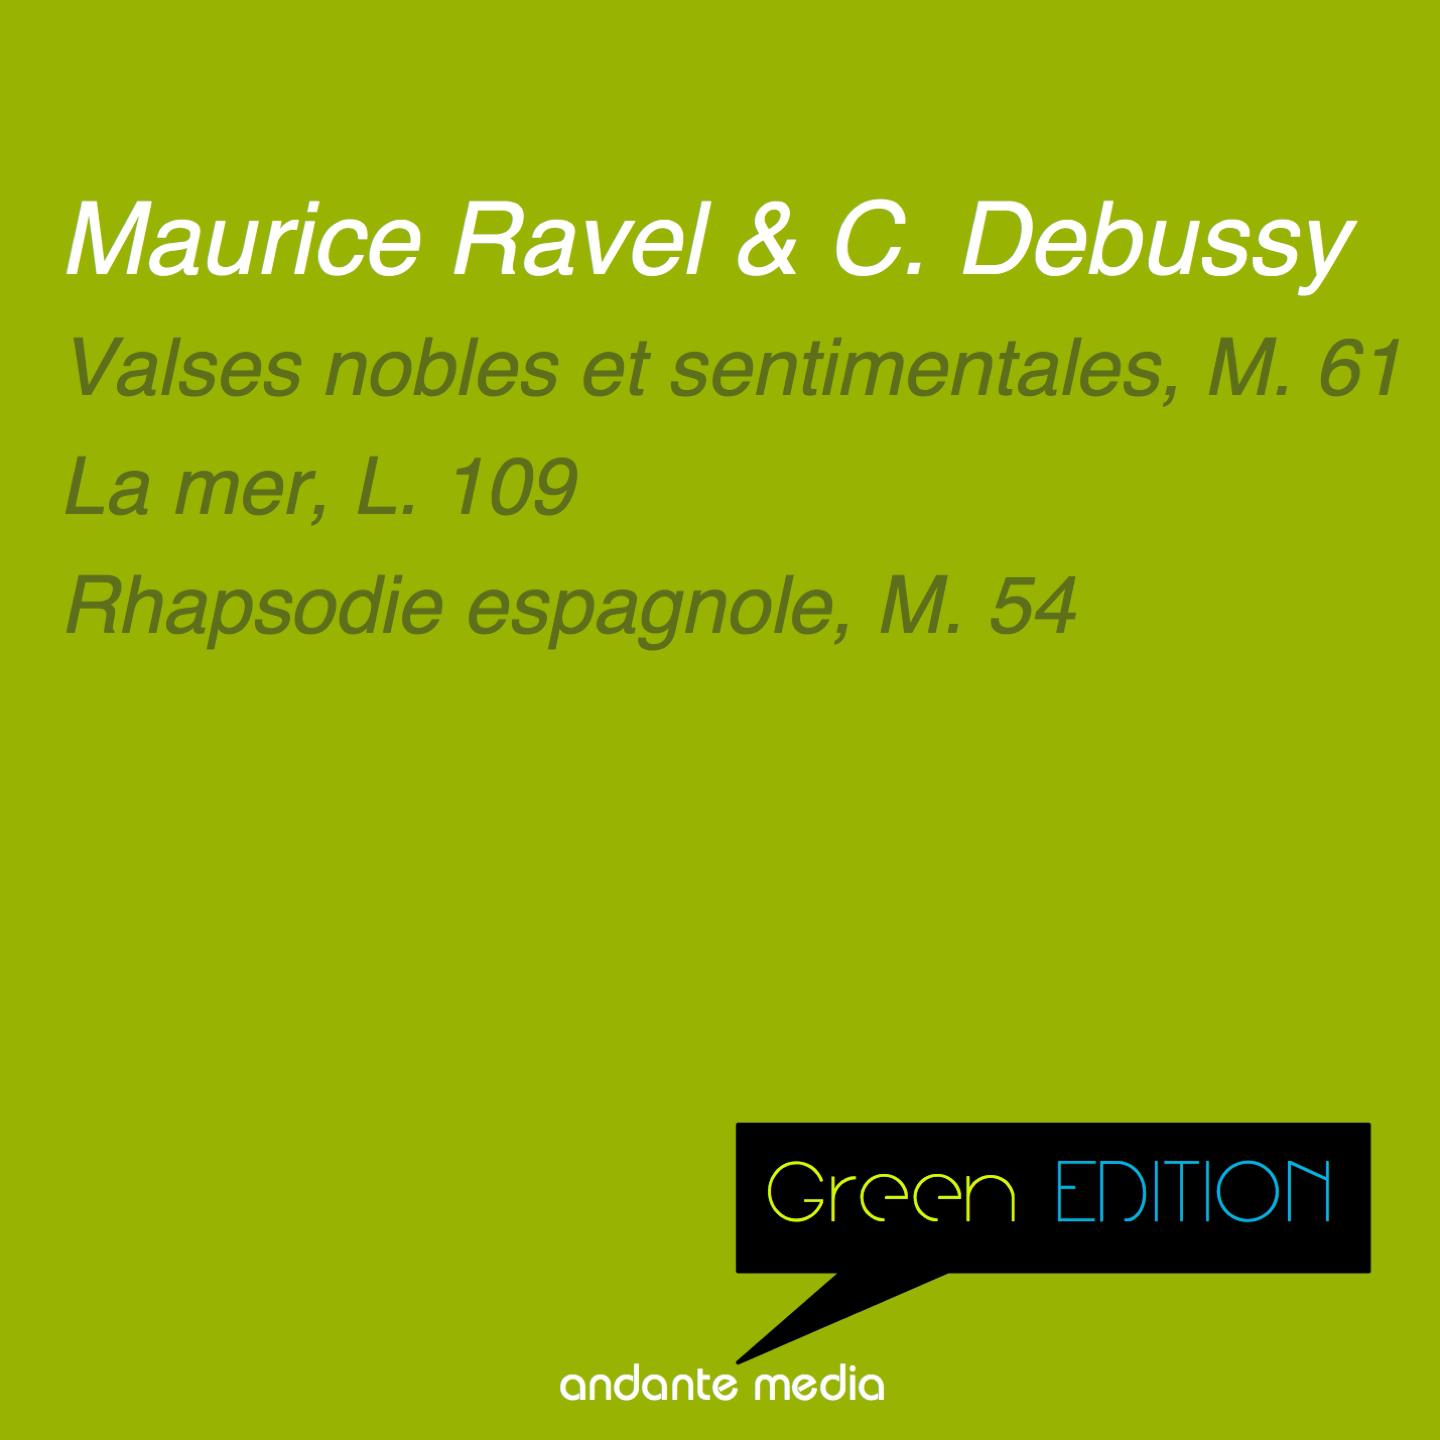 Green Edition - Debussy & Ravel: Valses nobles et sentimentales, M. 61